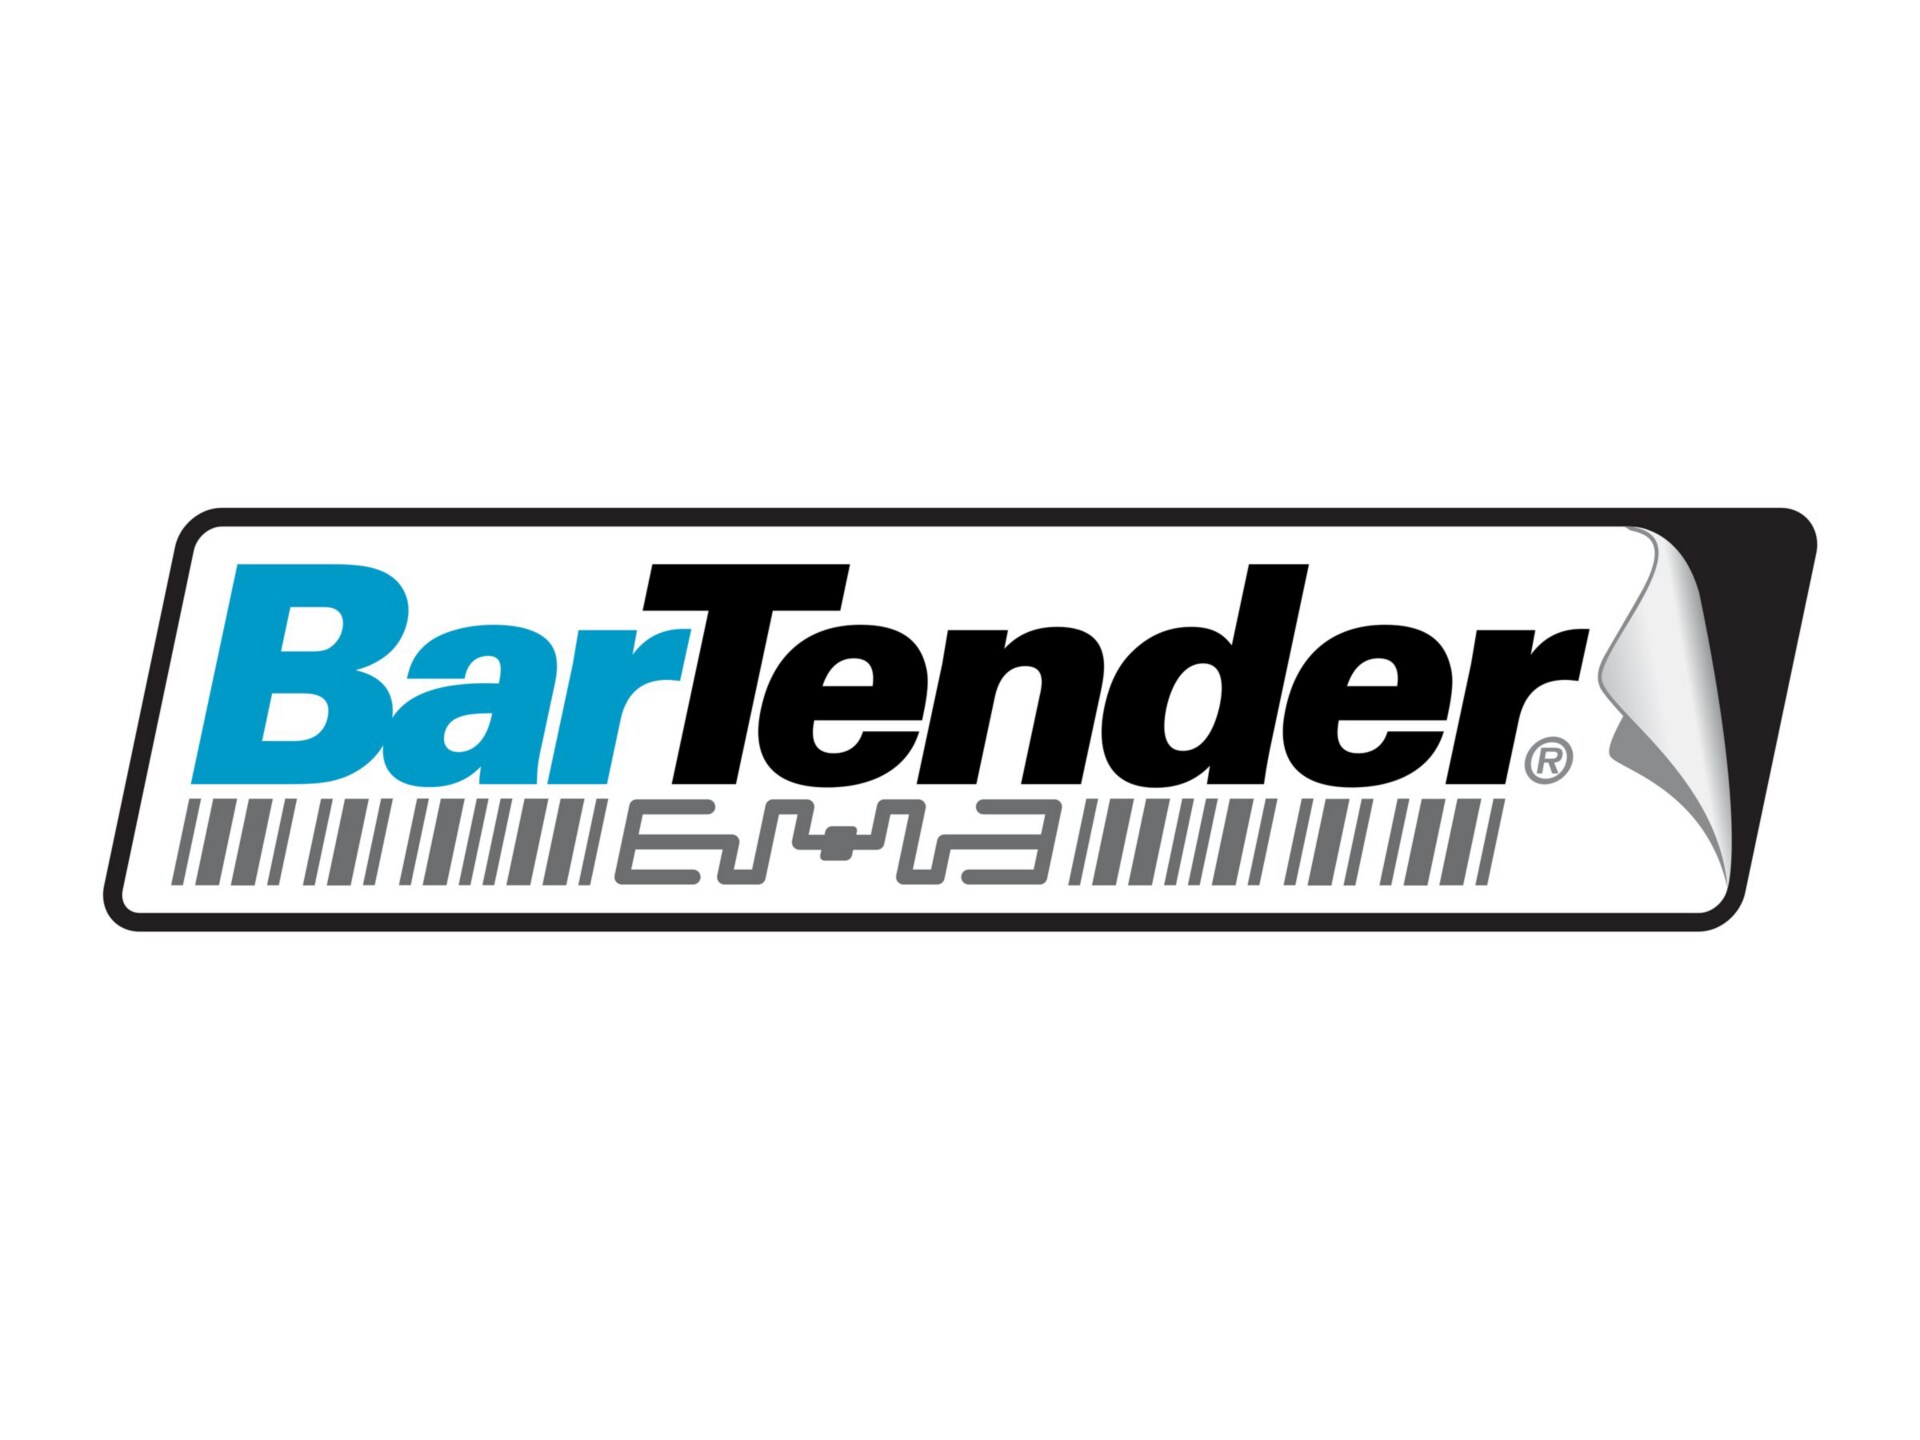 BarTender Automation (v. 10.0) - maintenance (1 month) - 60 printers